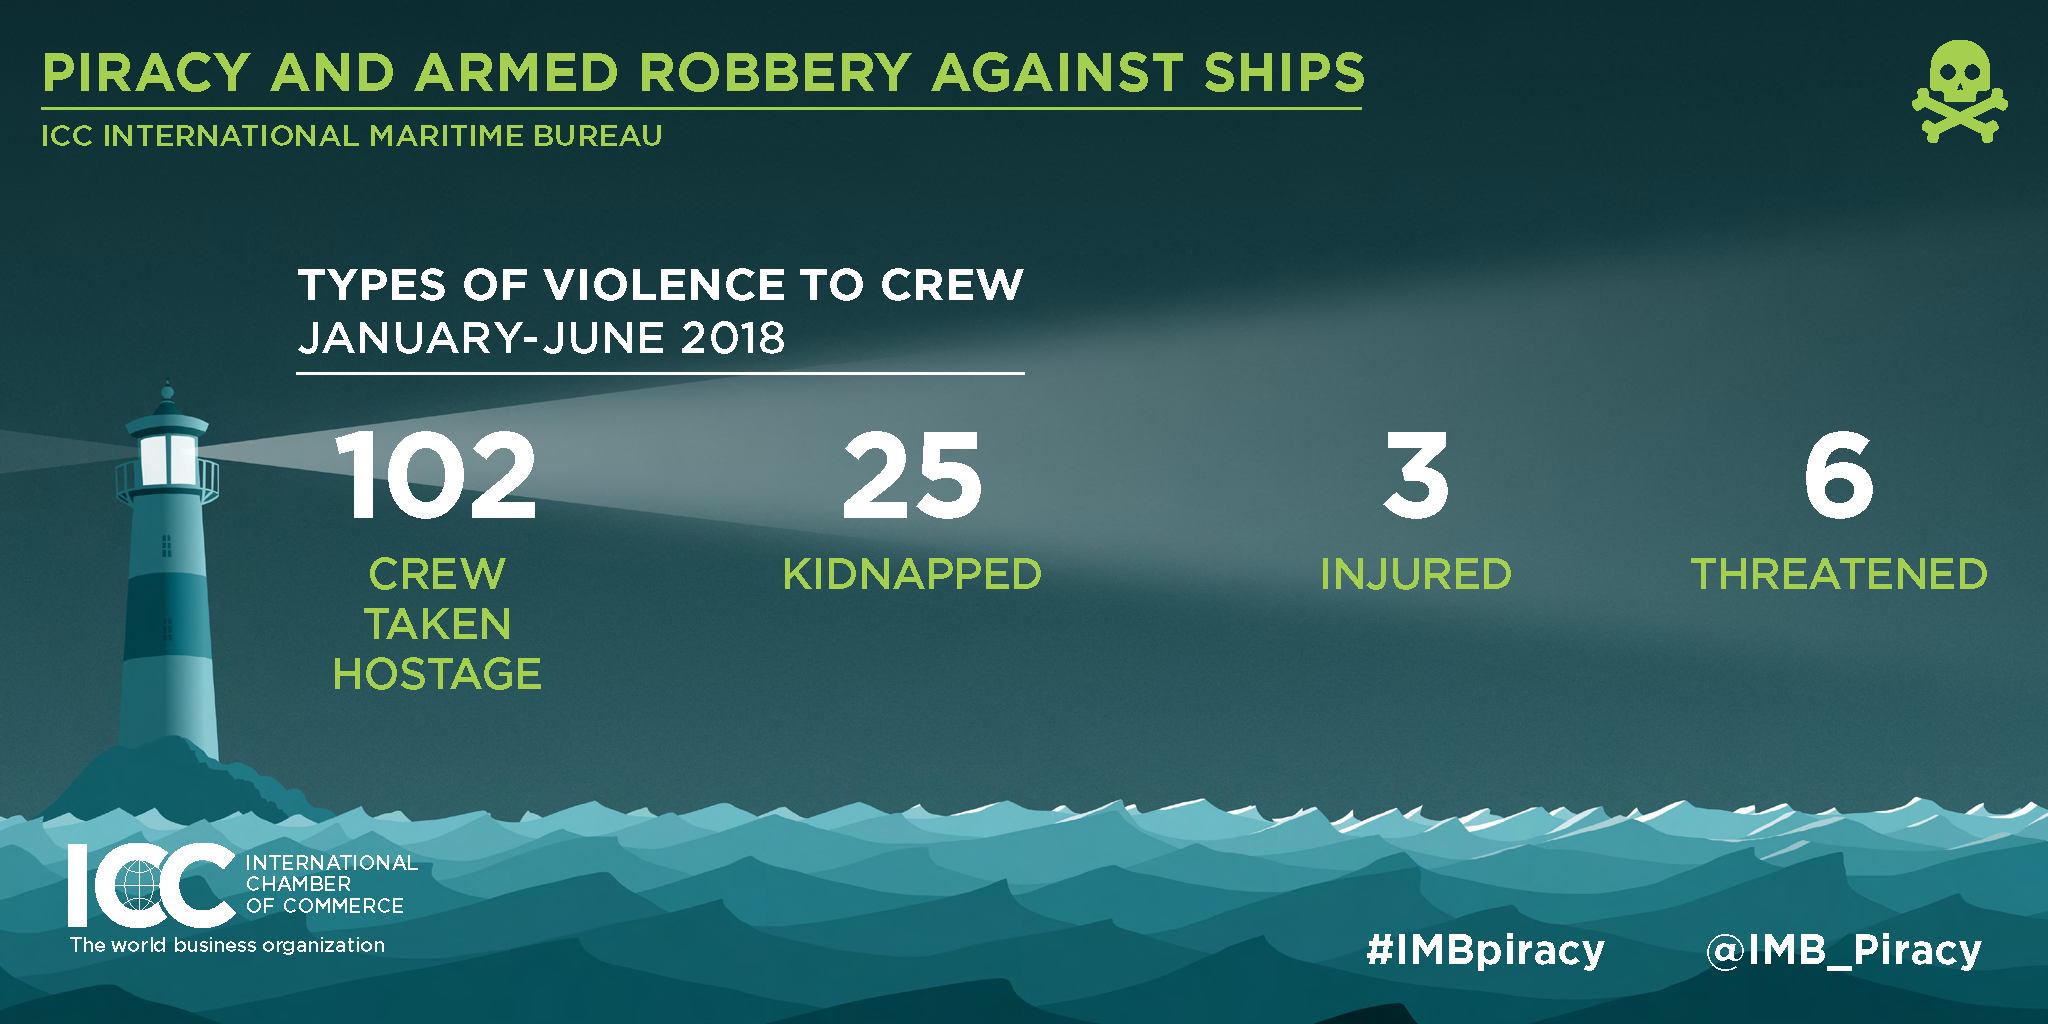 ICC IMB Piracy Report June 2018 Crew Violence